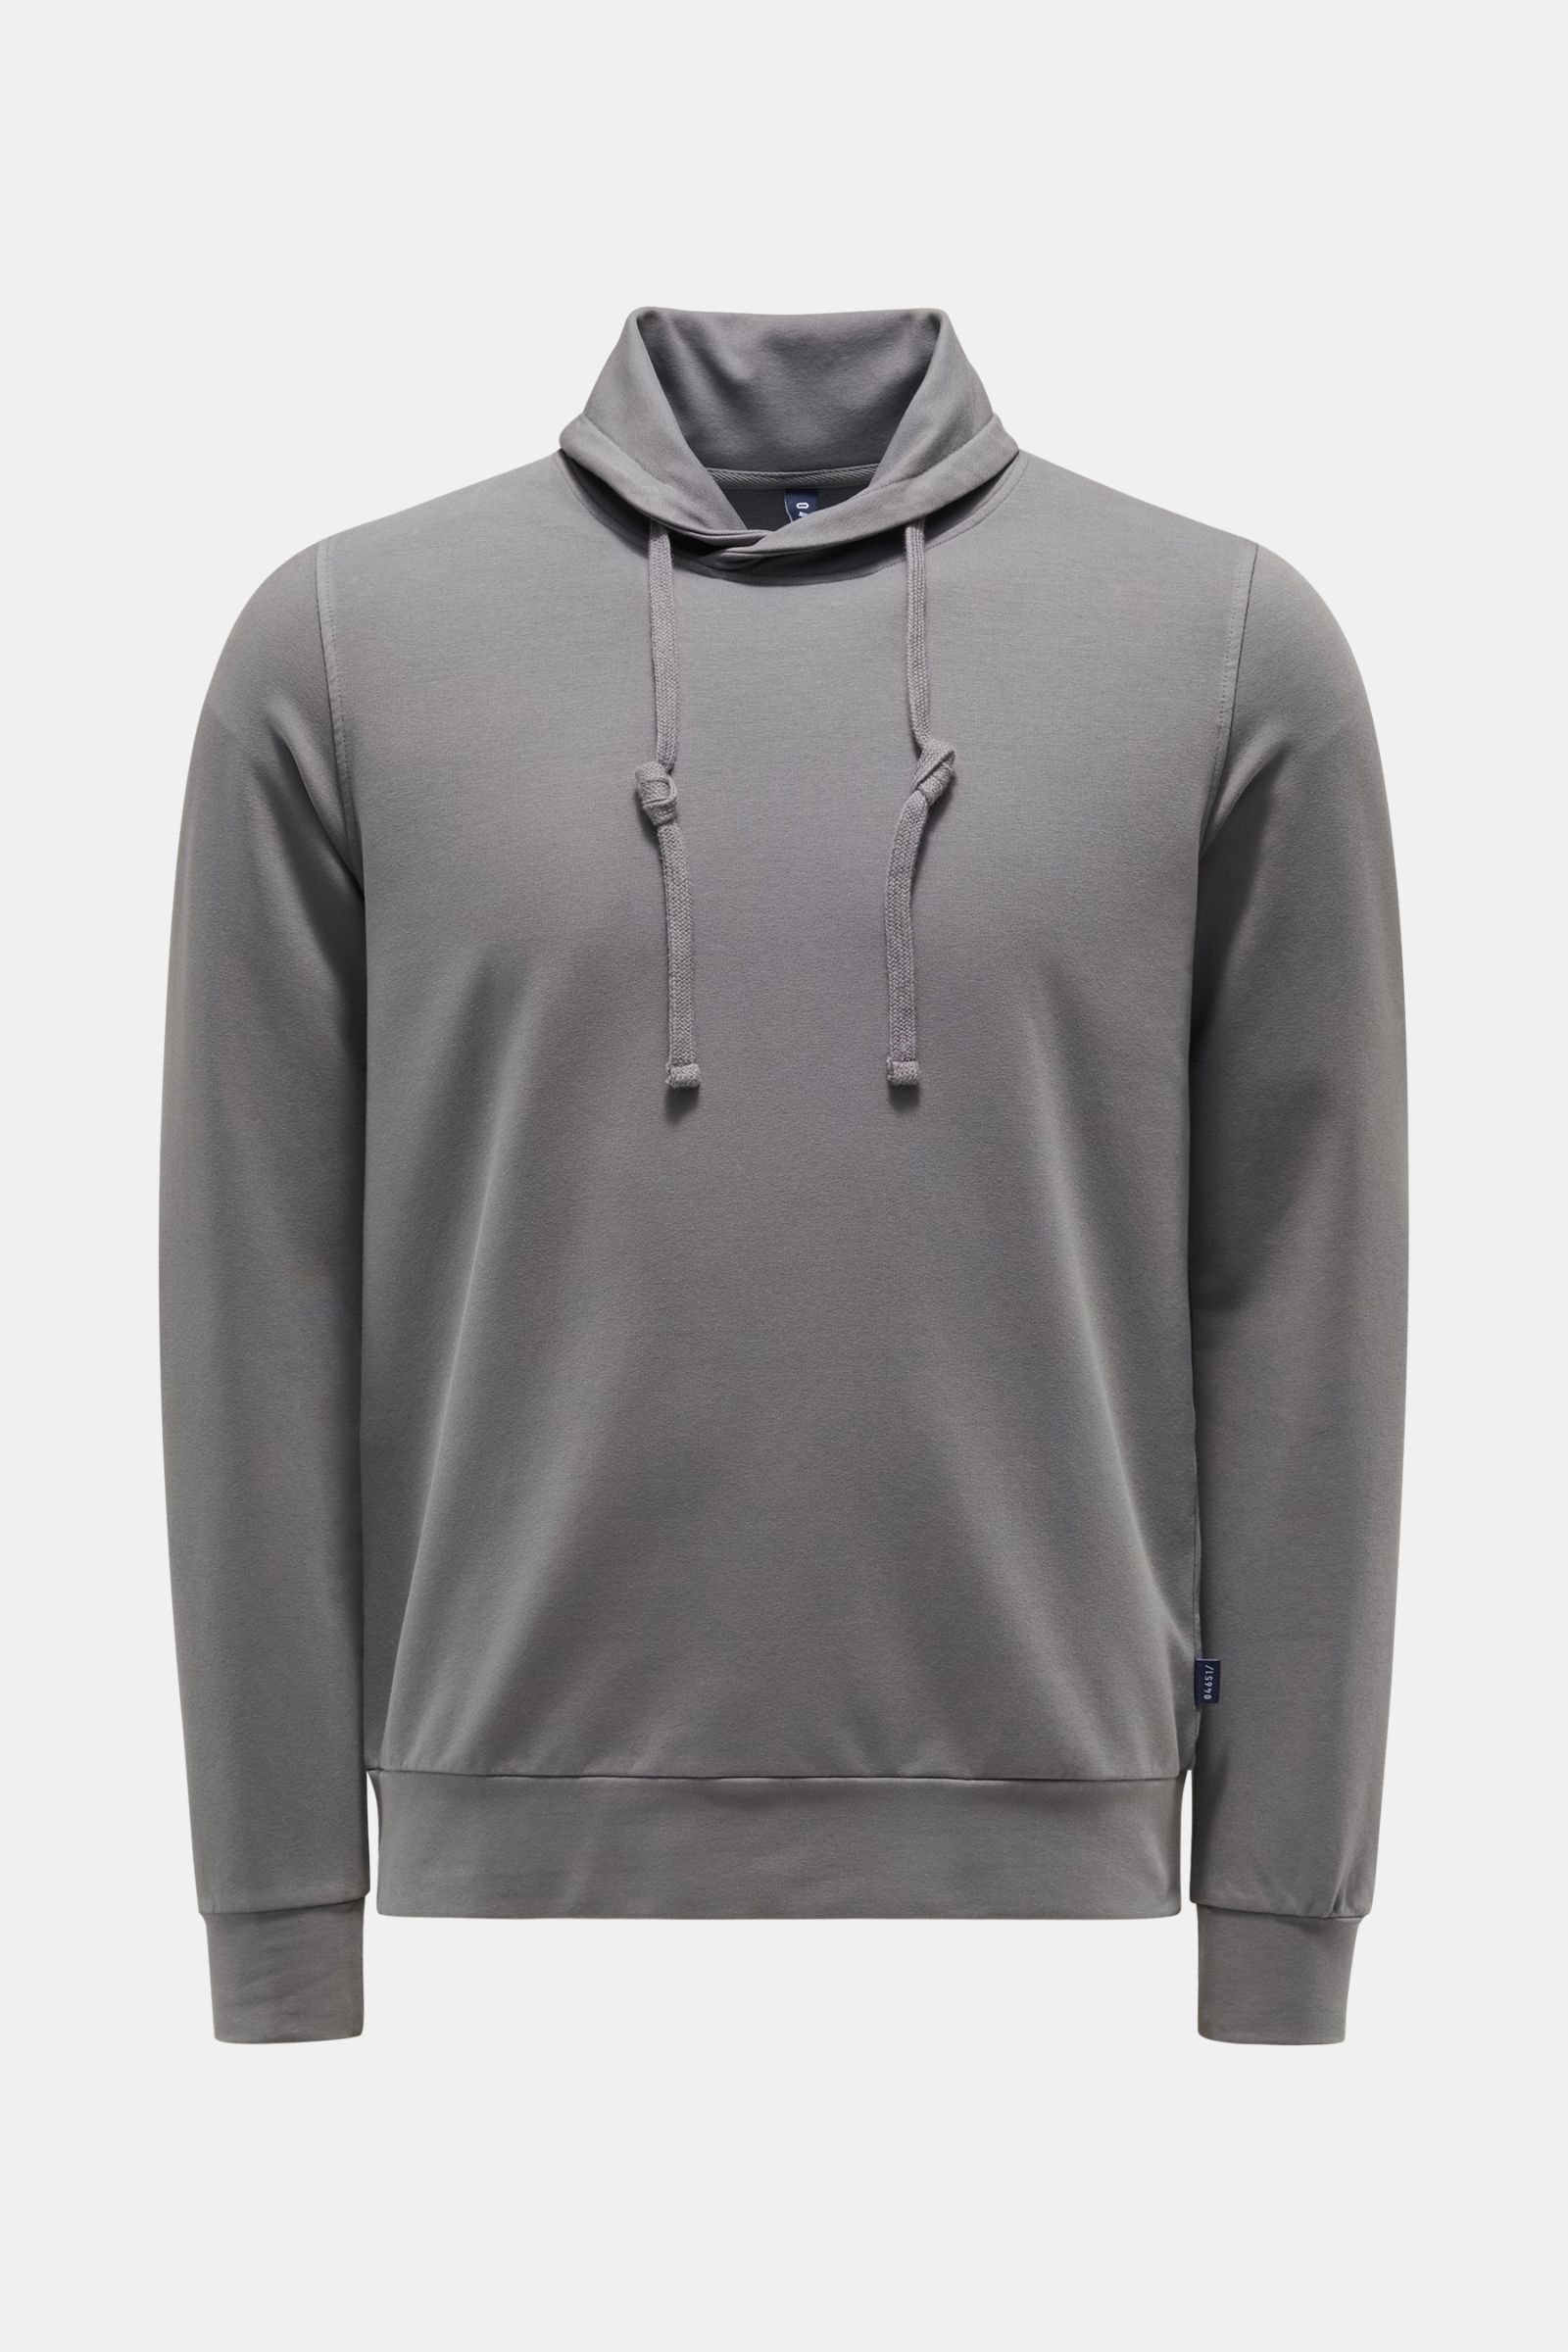 Sweatshirt grey